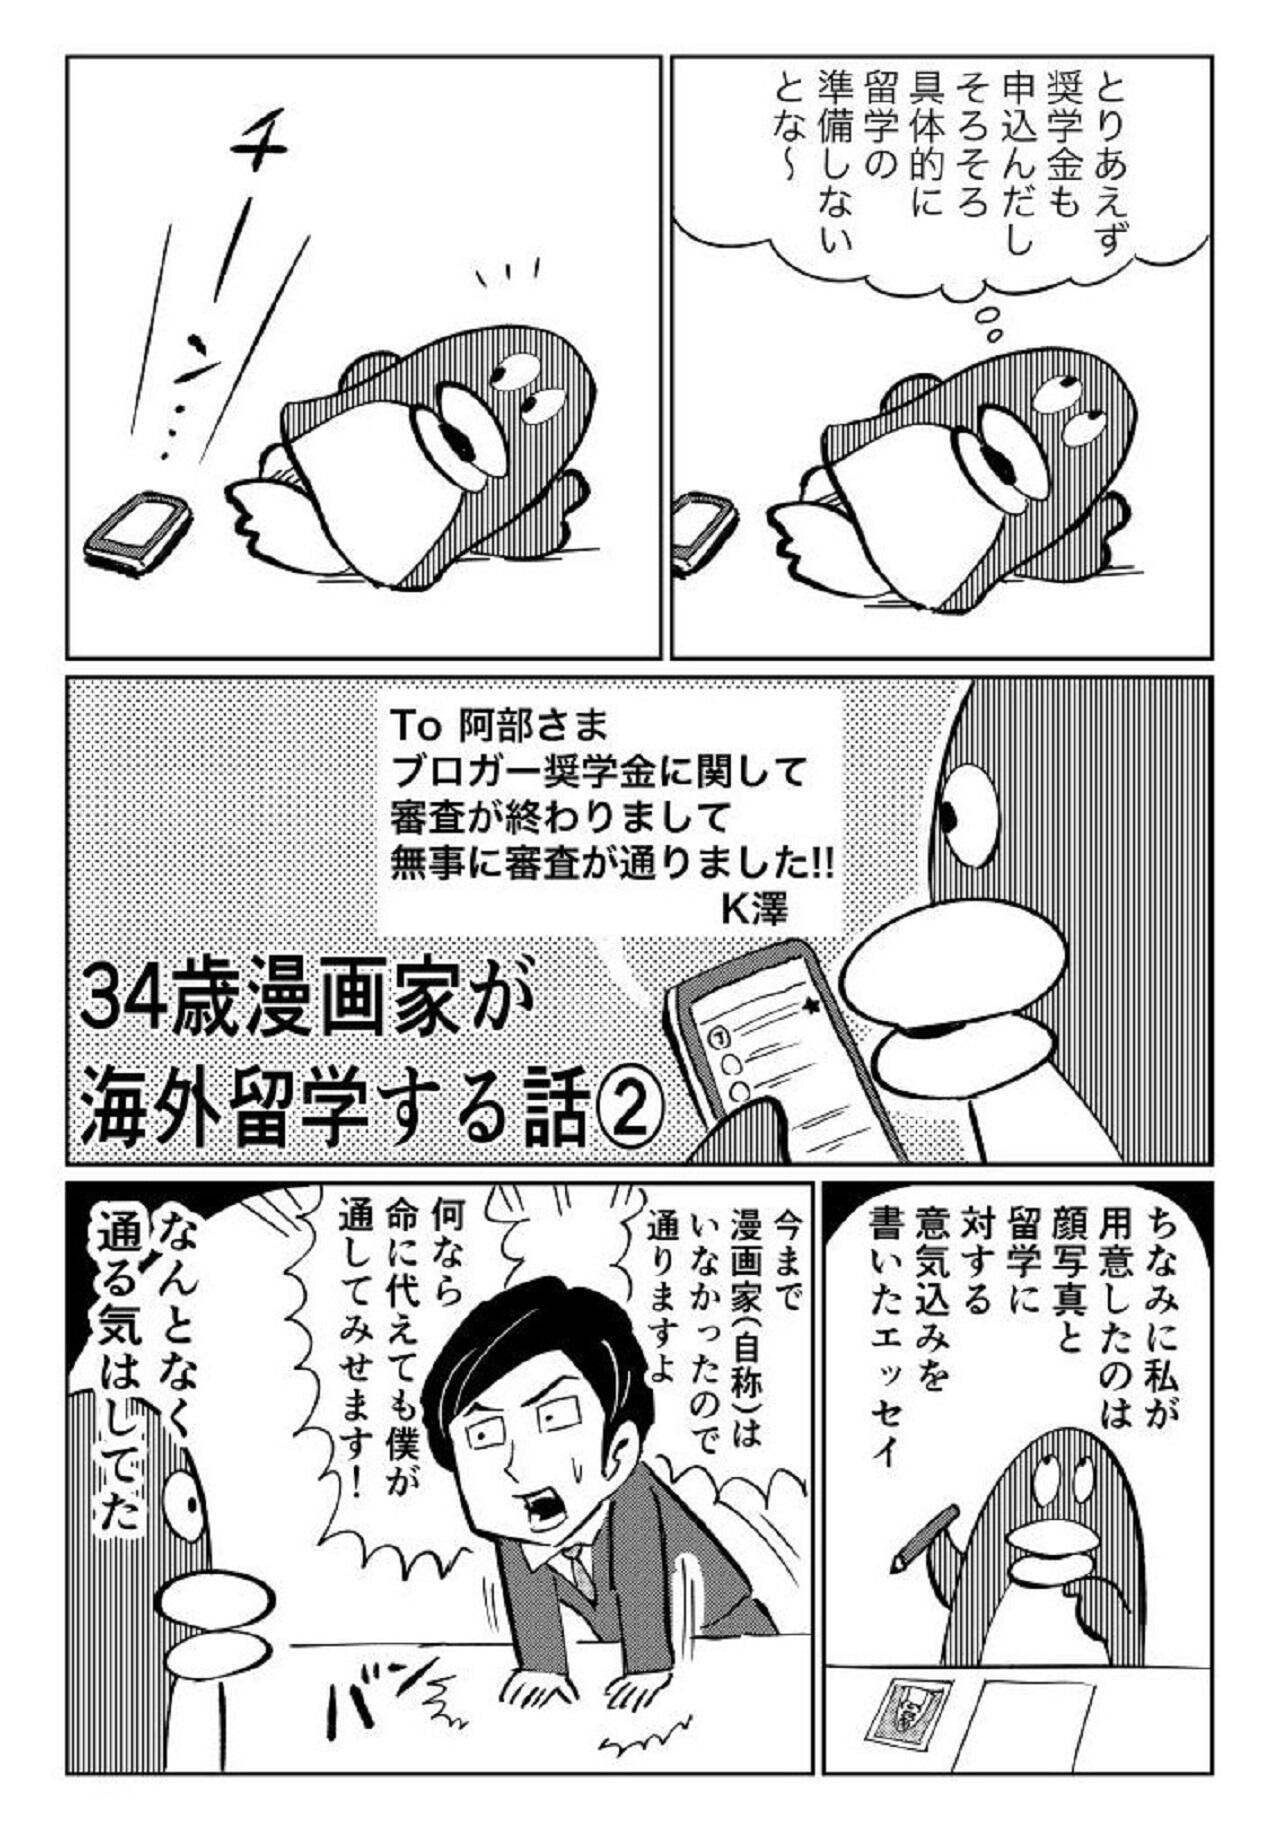 https://www.ryugaku.co.jp/column/images/34sai_2_1_1280.jpg